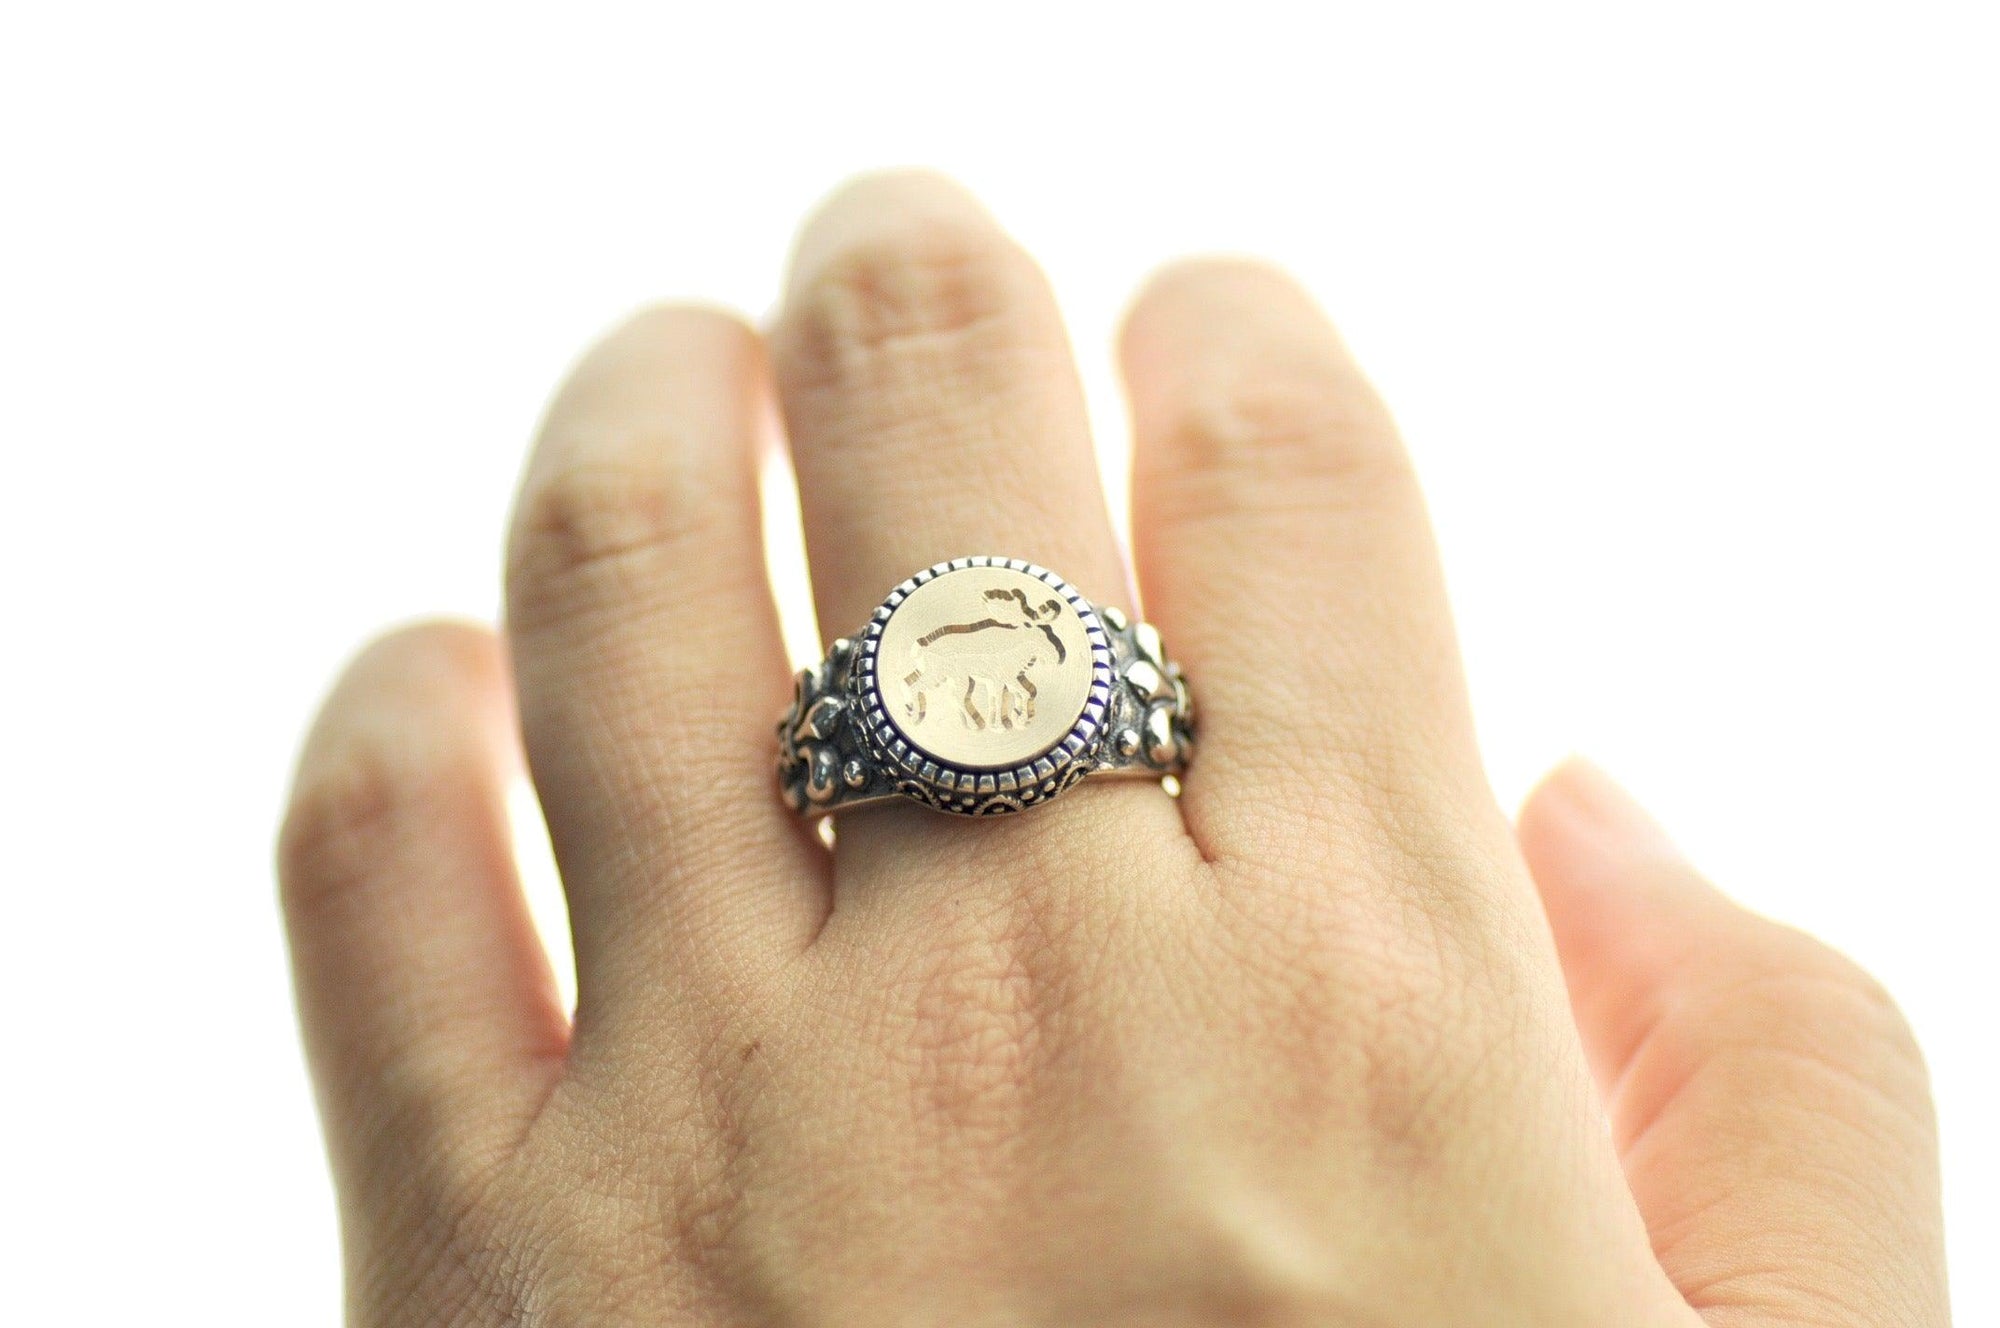 Moose Signet Ring - Backtozero B20 - 12f, 12mm, 12mm ring, accessory, Animal, Fleur de Lis, him, jewelry, Moose, ring, signet ring, size 10, size 11, size 8, size 9, wax seal, wax seal ring, wax seal stamp, Woodland Animal